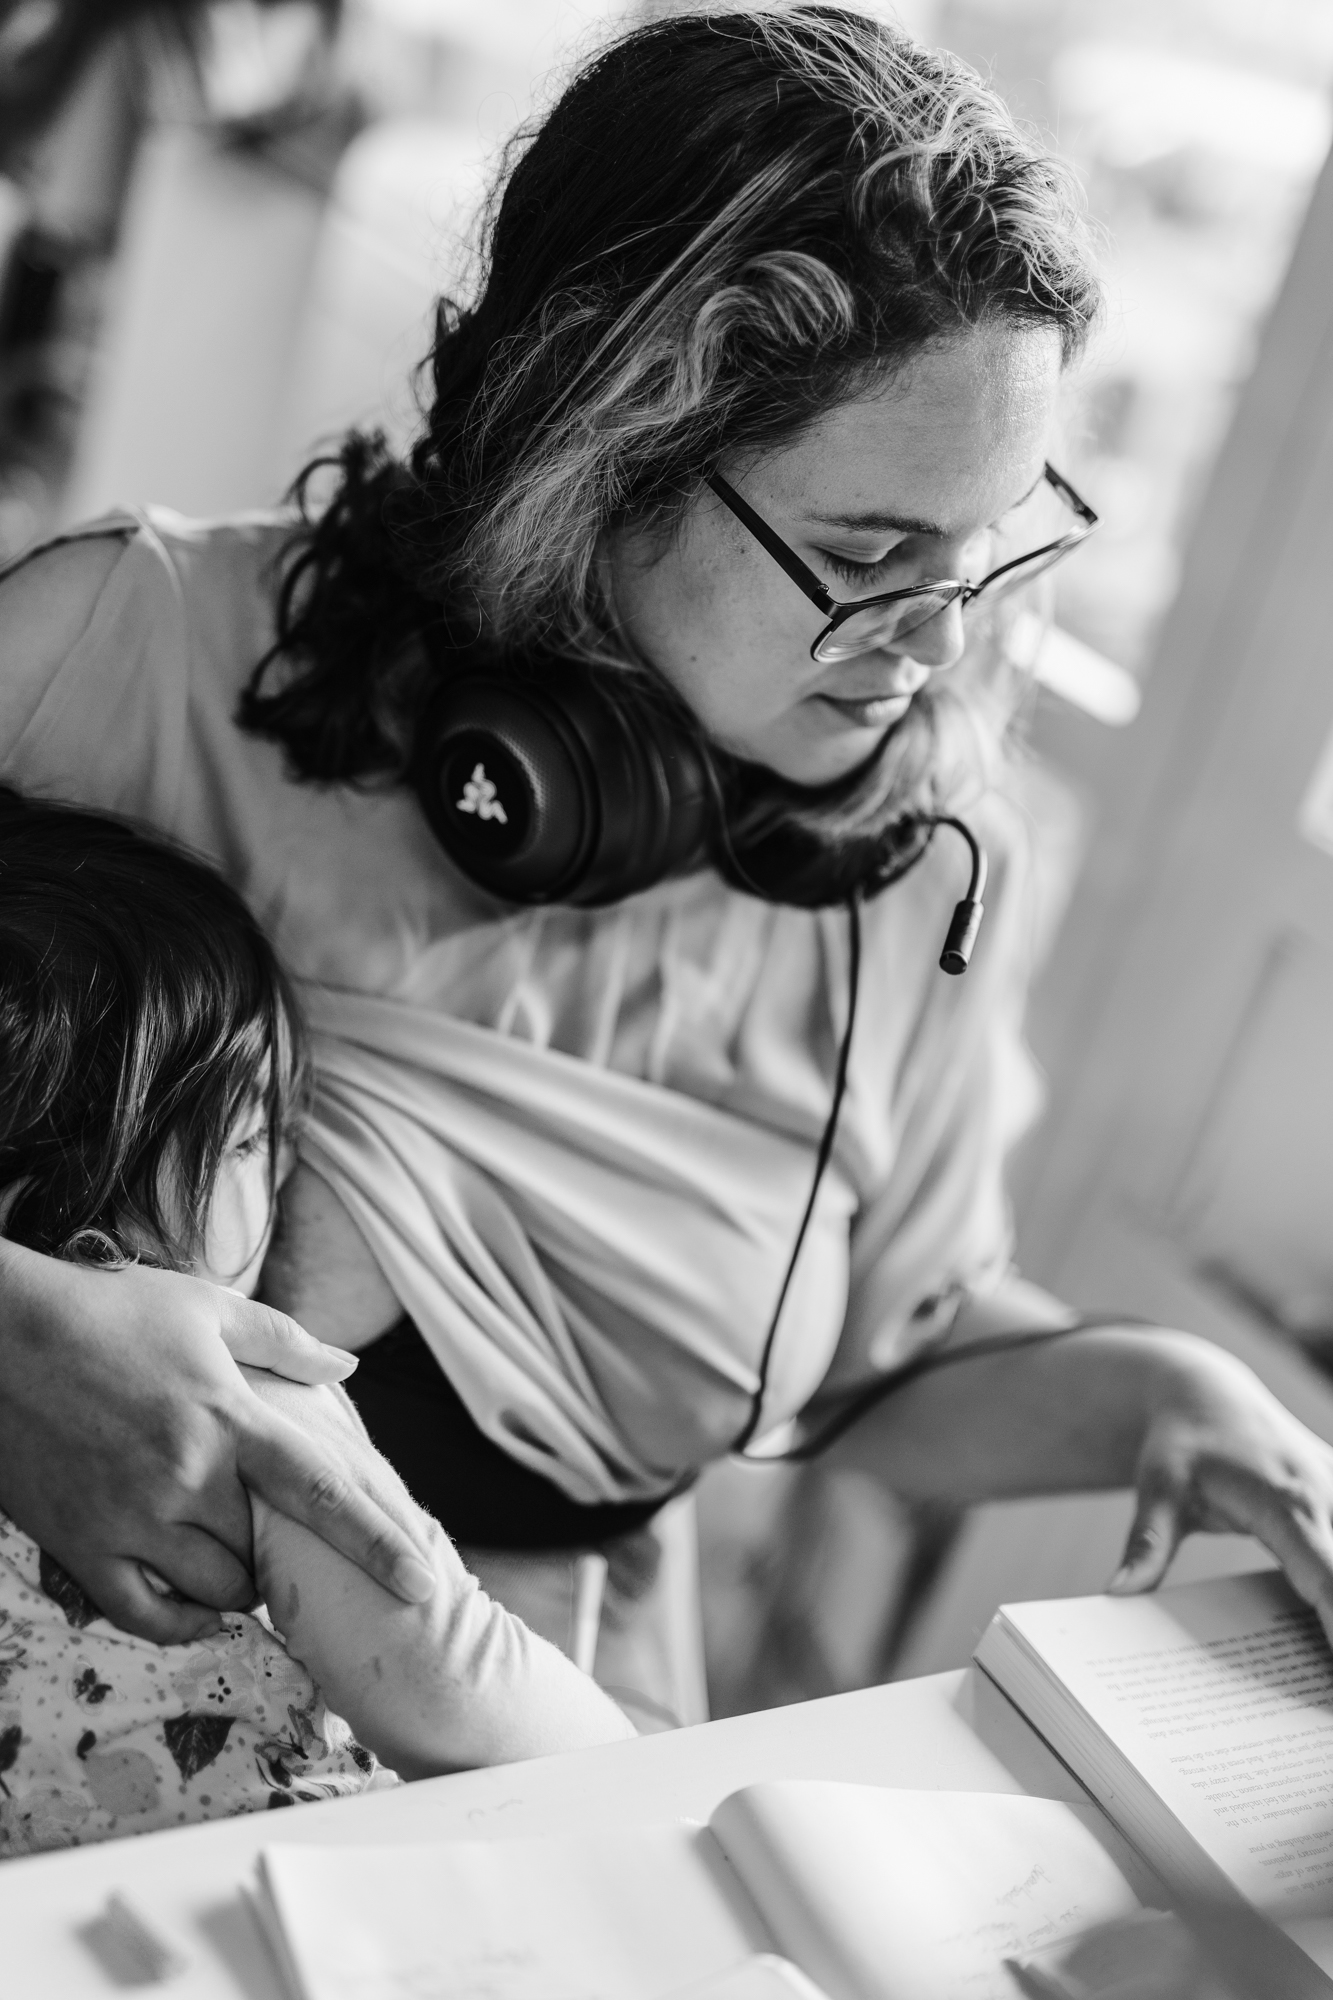 Women working while breastfeeding